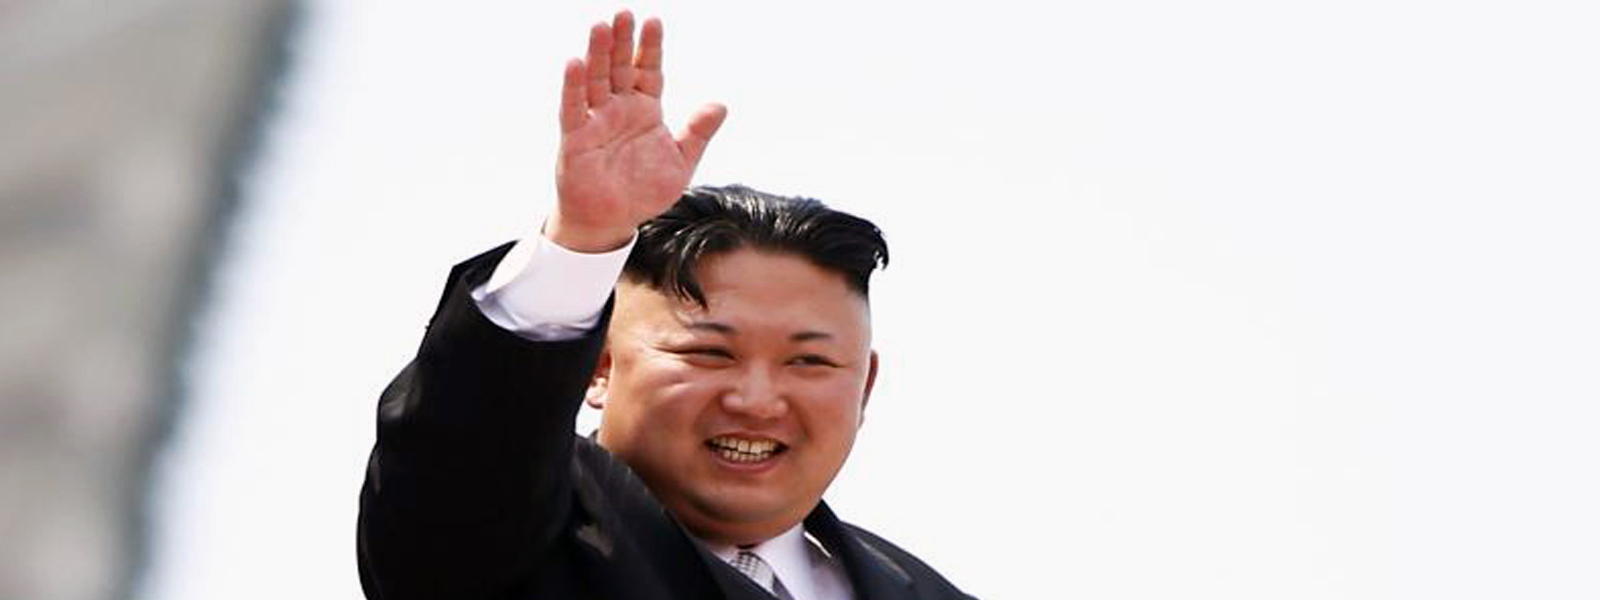 Kim Jong-un's visit to china confirmed